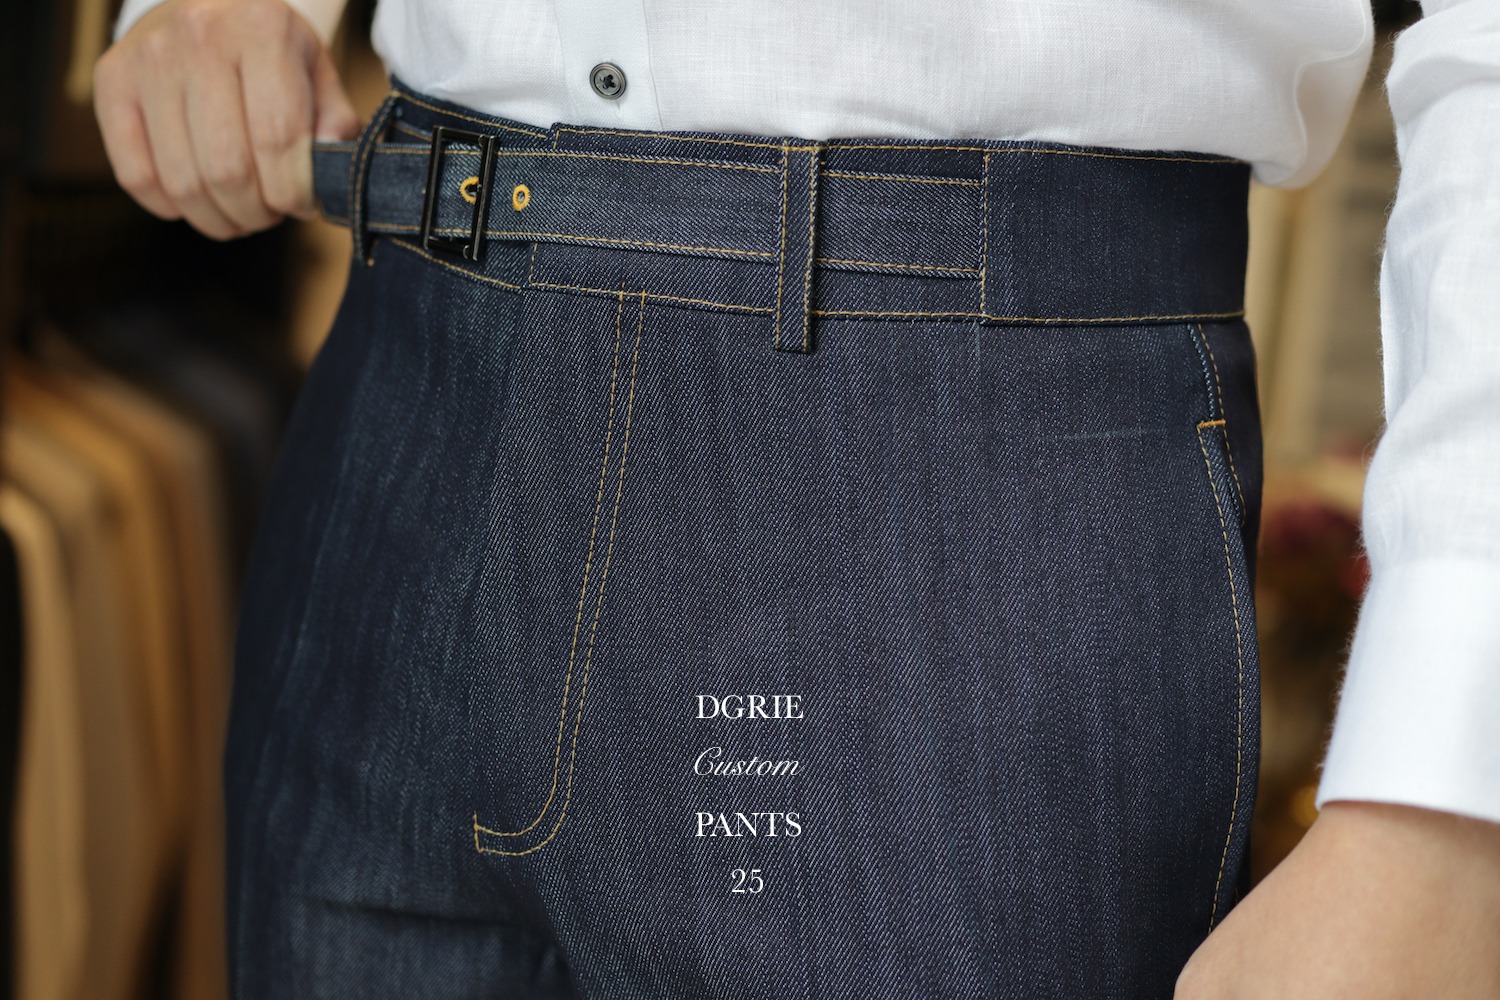 Customs by Vee - LV custom jeans 🔥